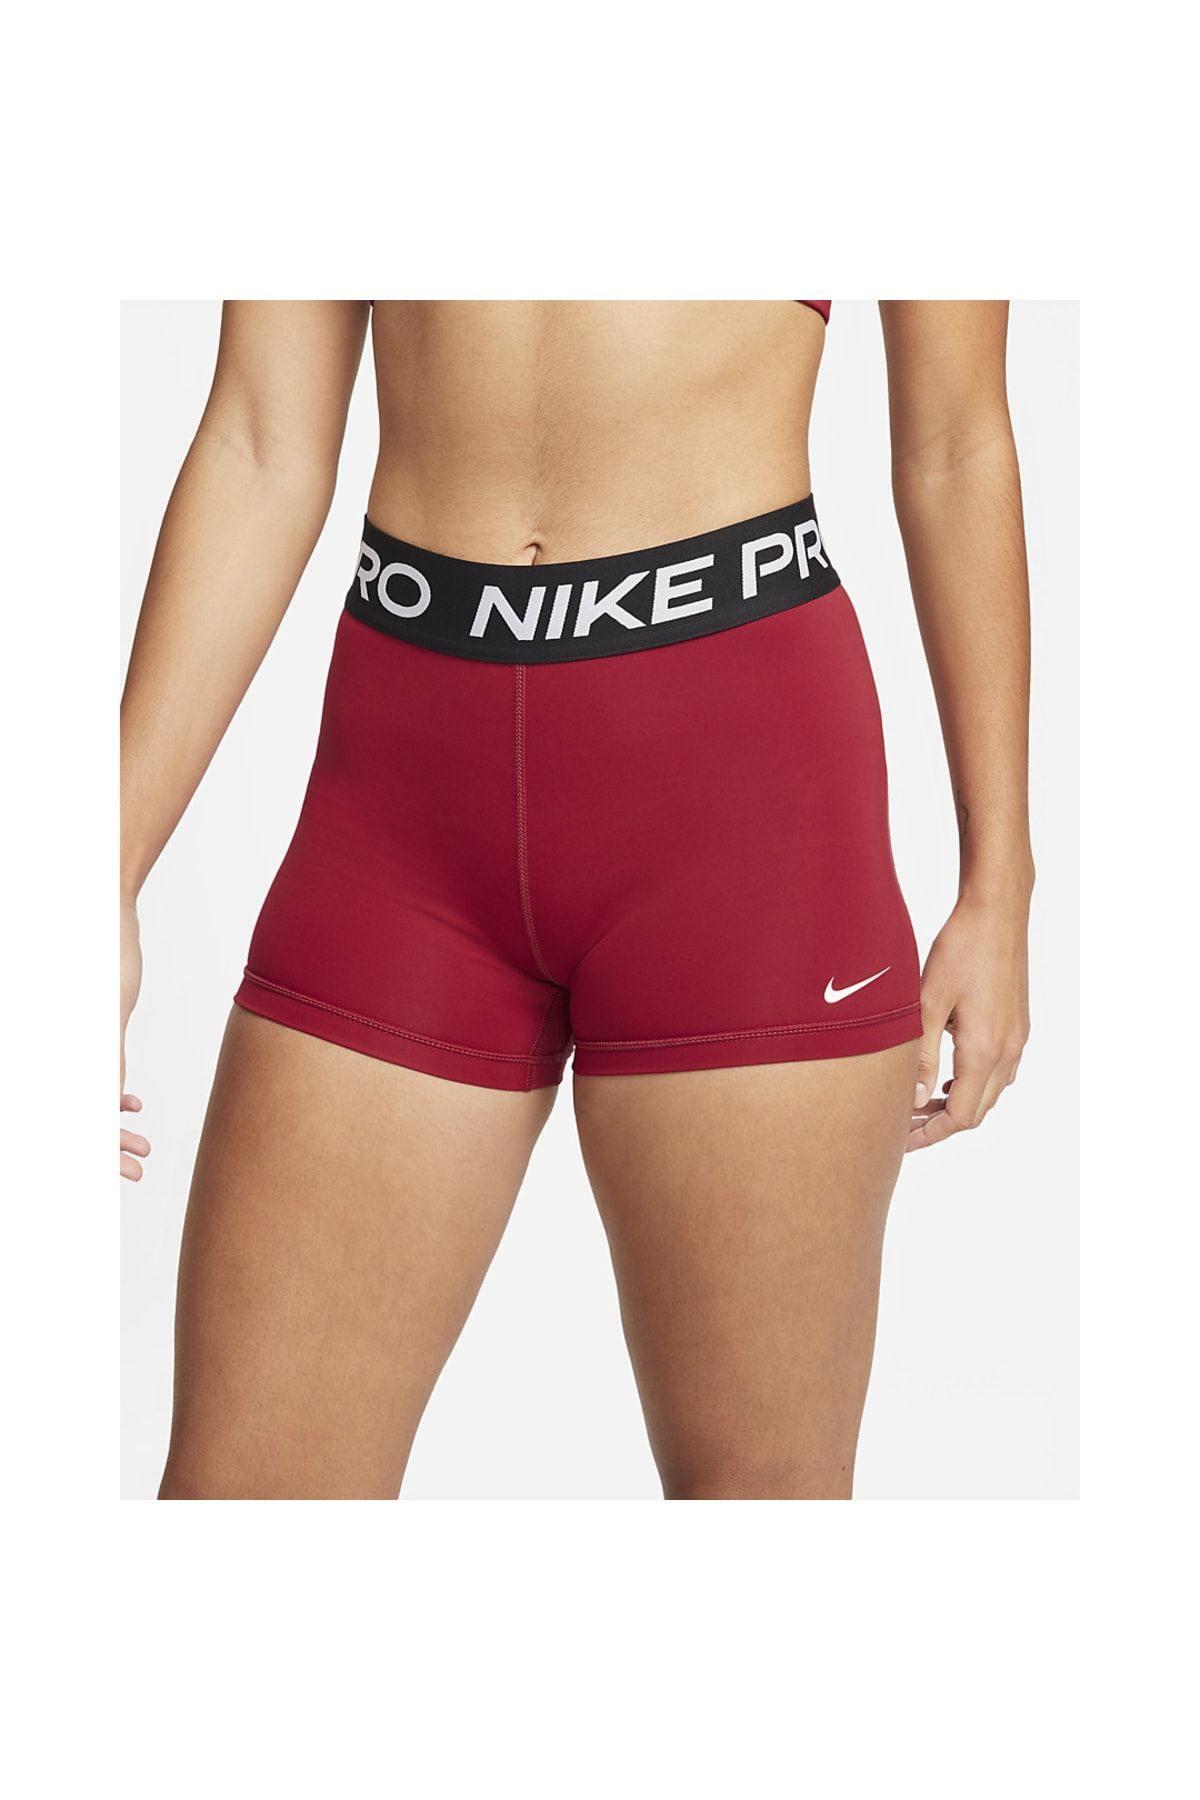 Nike Dri-fit Pro 365 Training Tights Shorts Da0481-690 - Trendyol